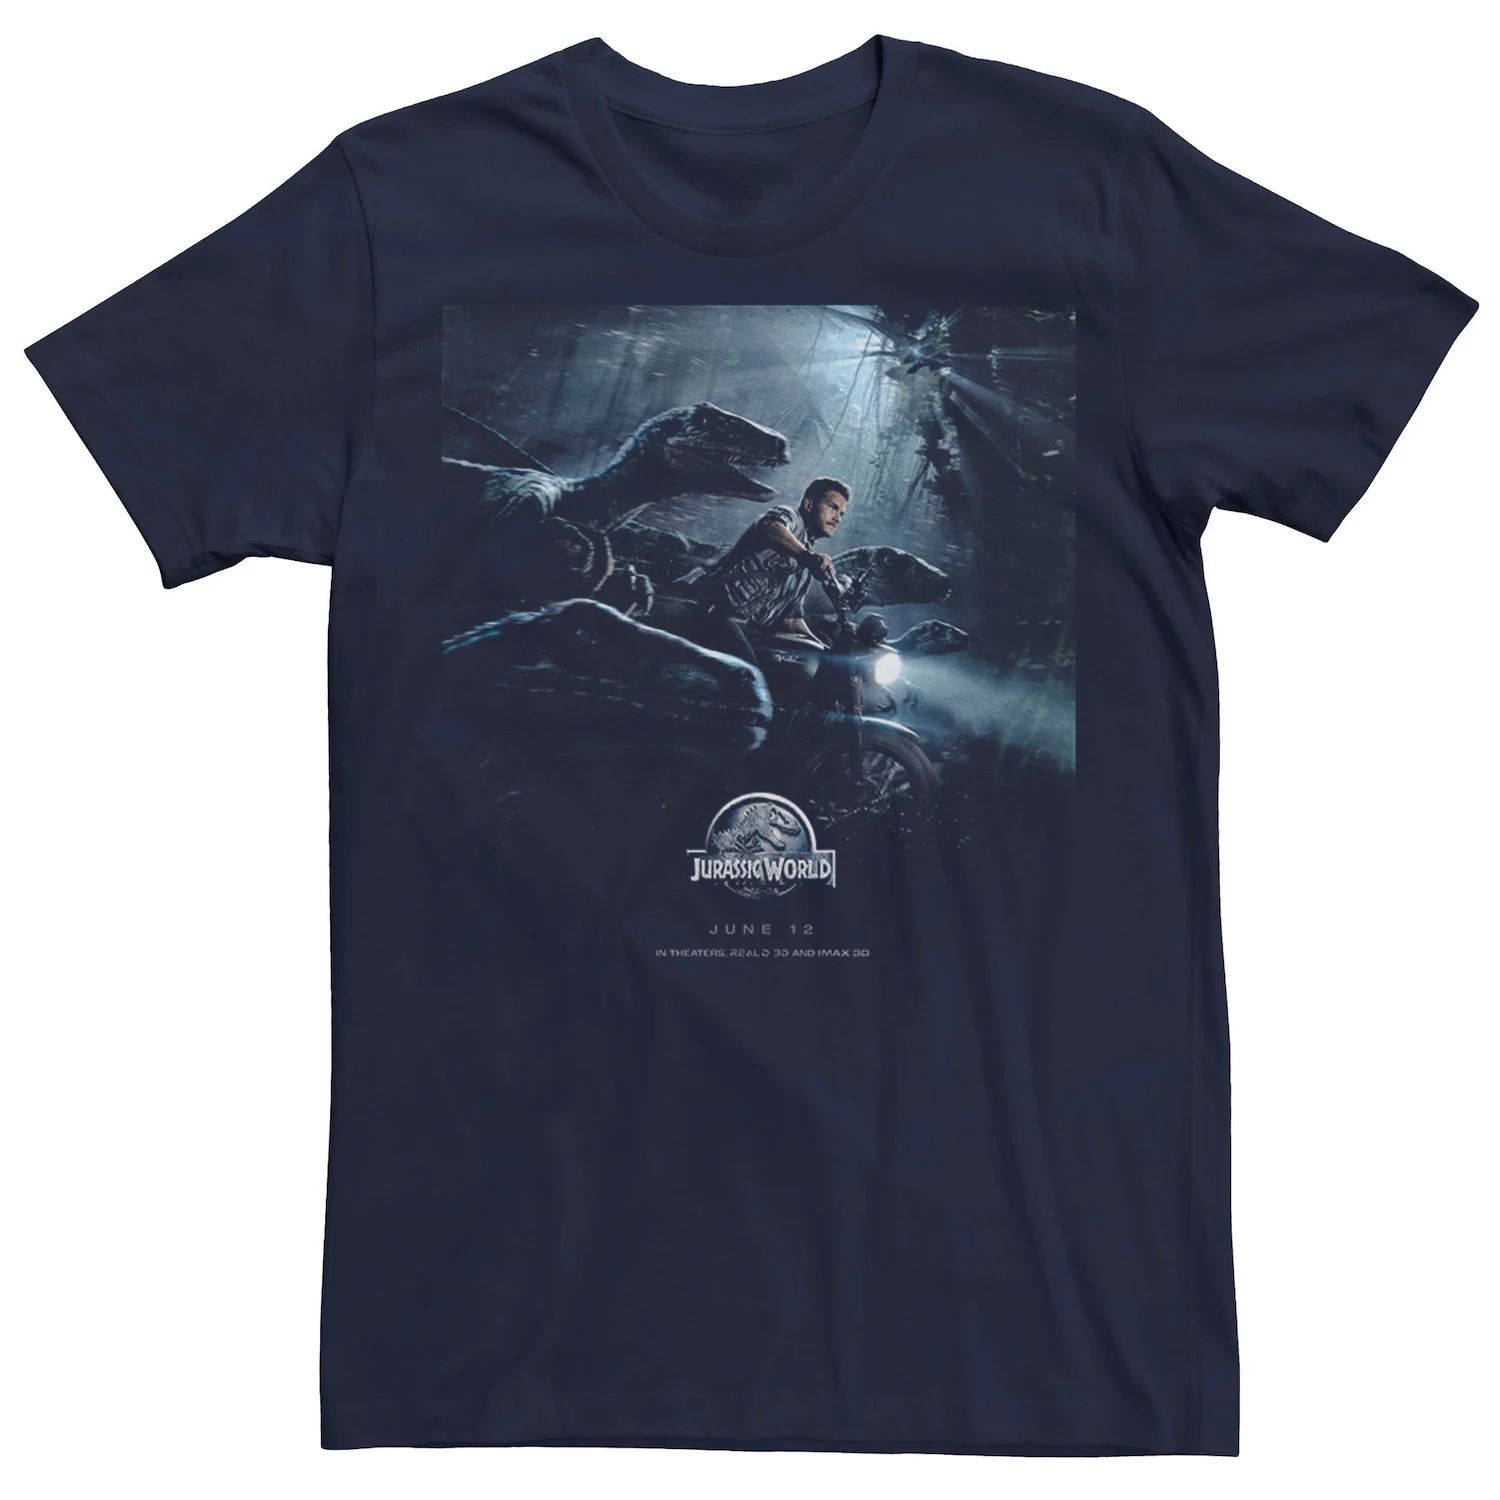 Мужская футболка с плакатом Owen Raptors Jurassic World